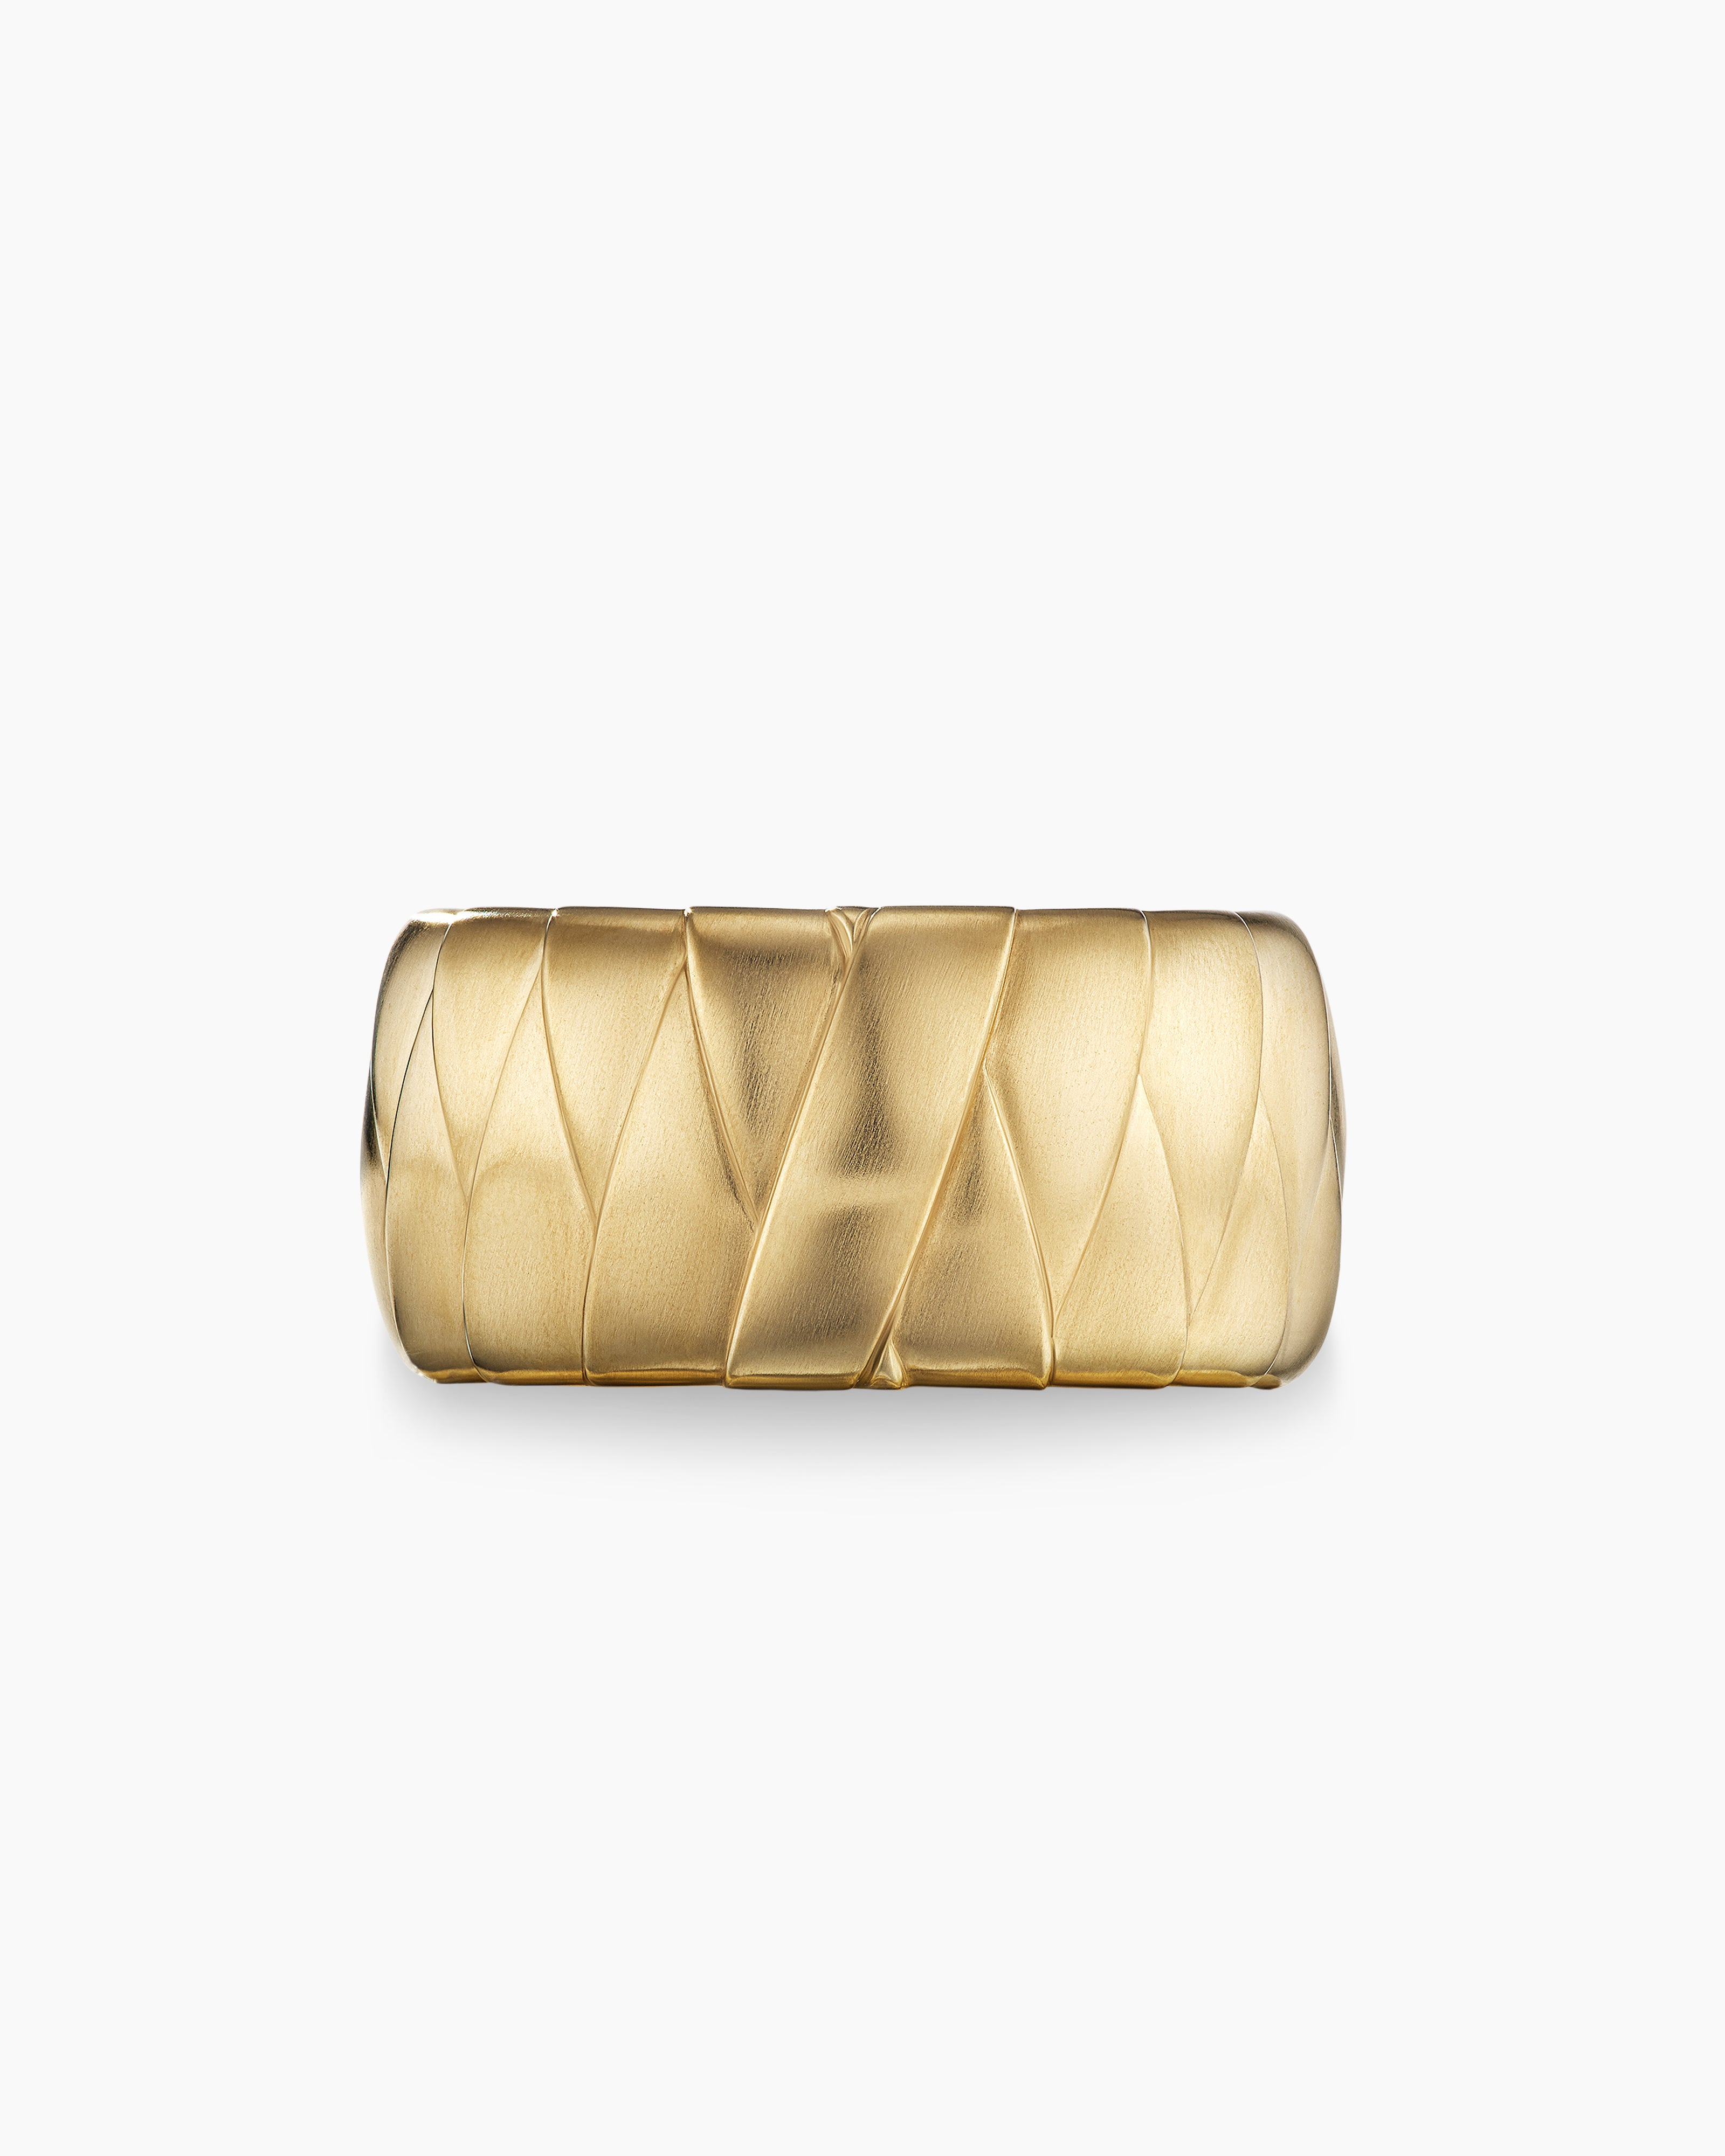 David Yurman Men's Cairo Wrap Band Ring in 18K Gold, 12mm, Men's, 11, Men's Jewelry Men's Rings